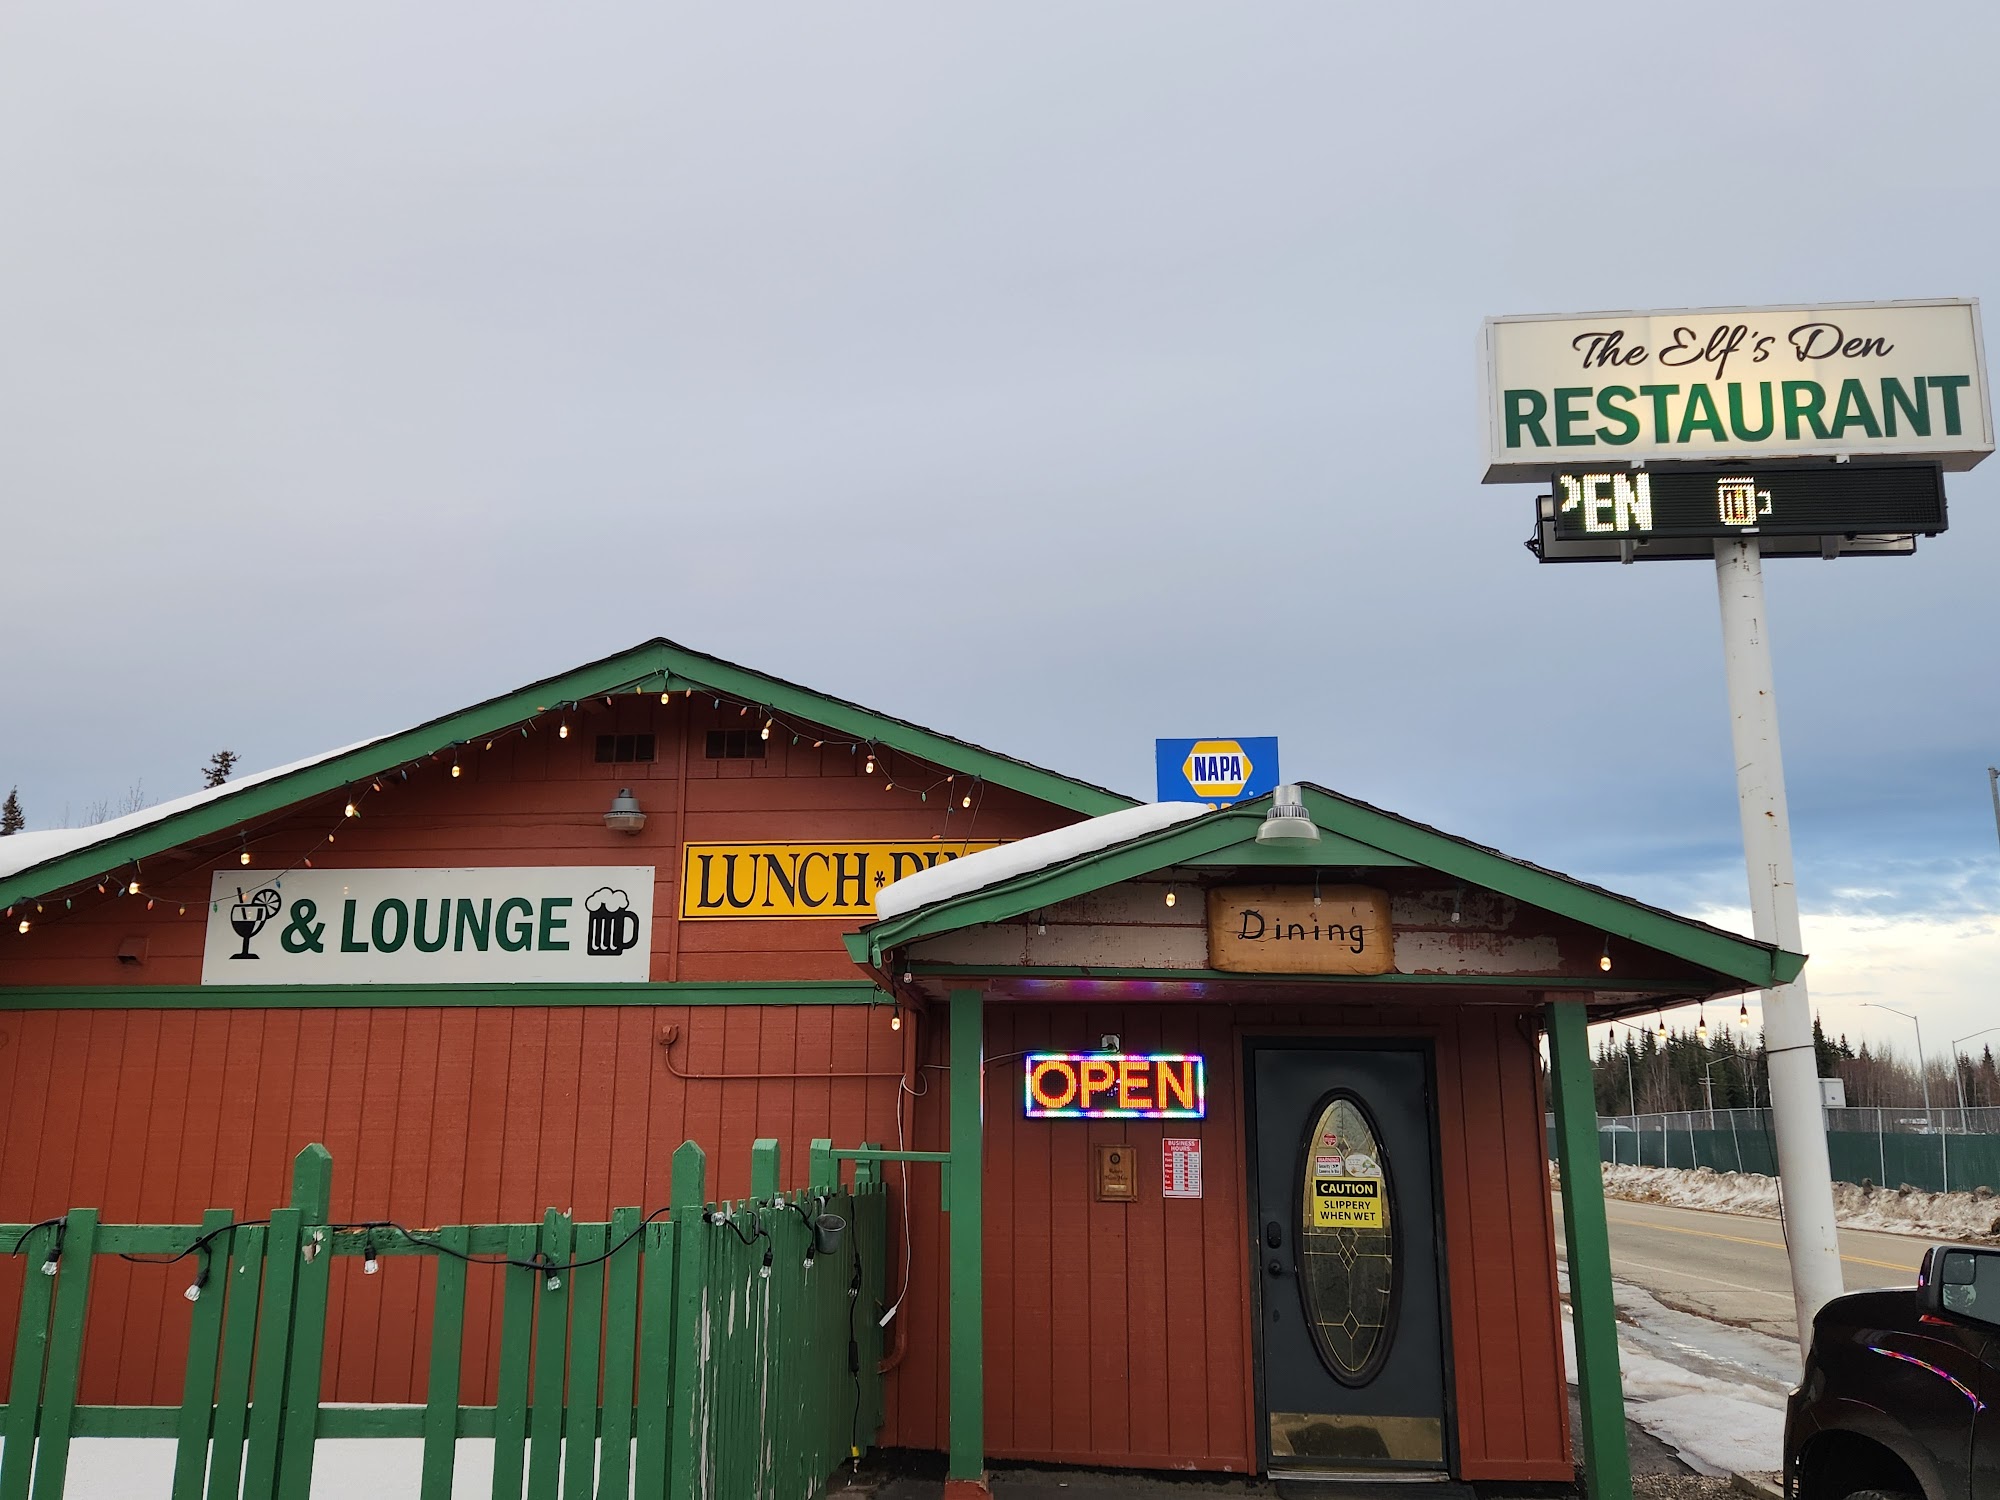 Elf's Den Restaurant & Lounge